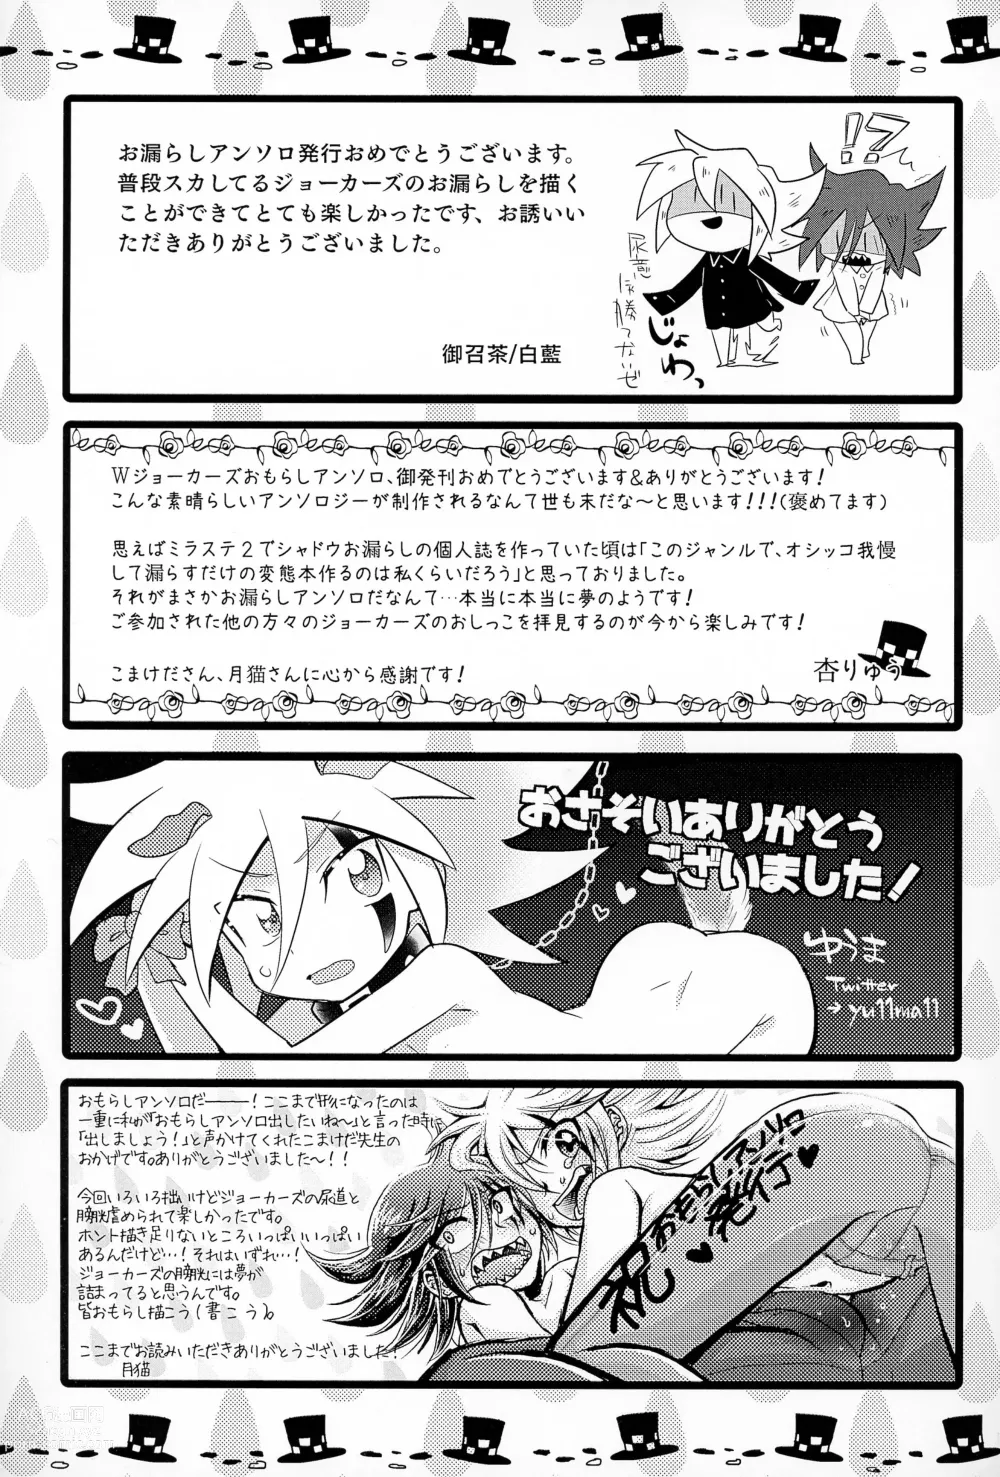 Page 87 of doujinshi Its NYOU Time!